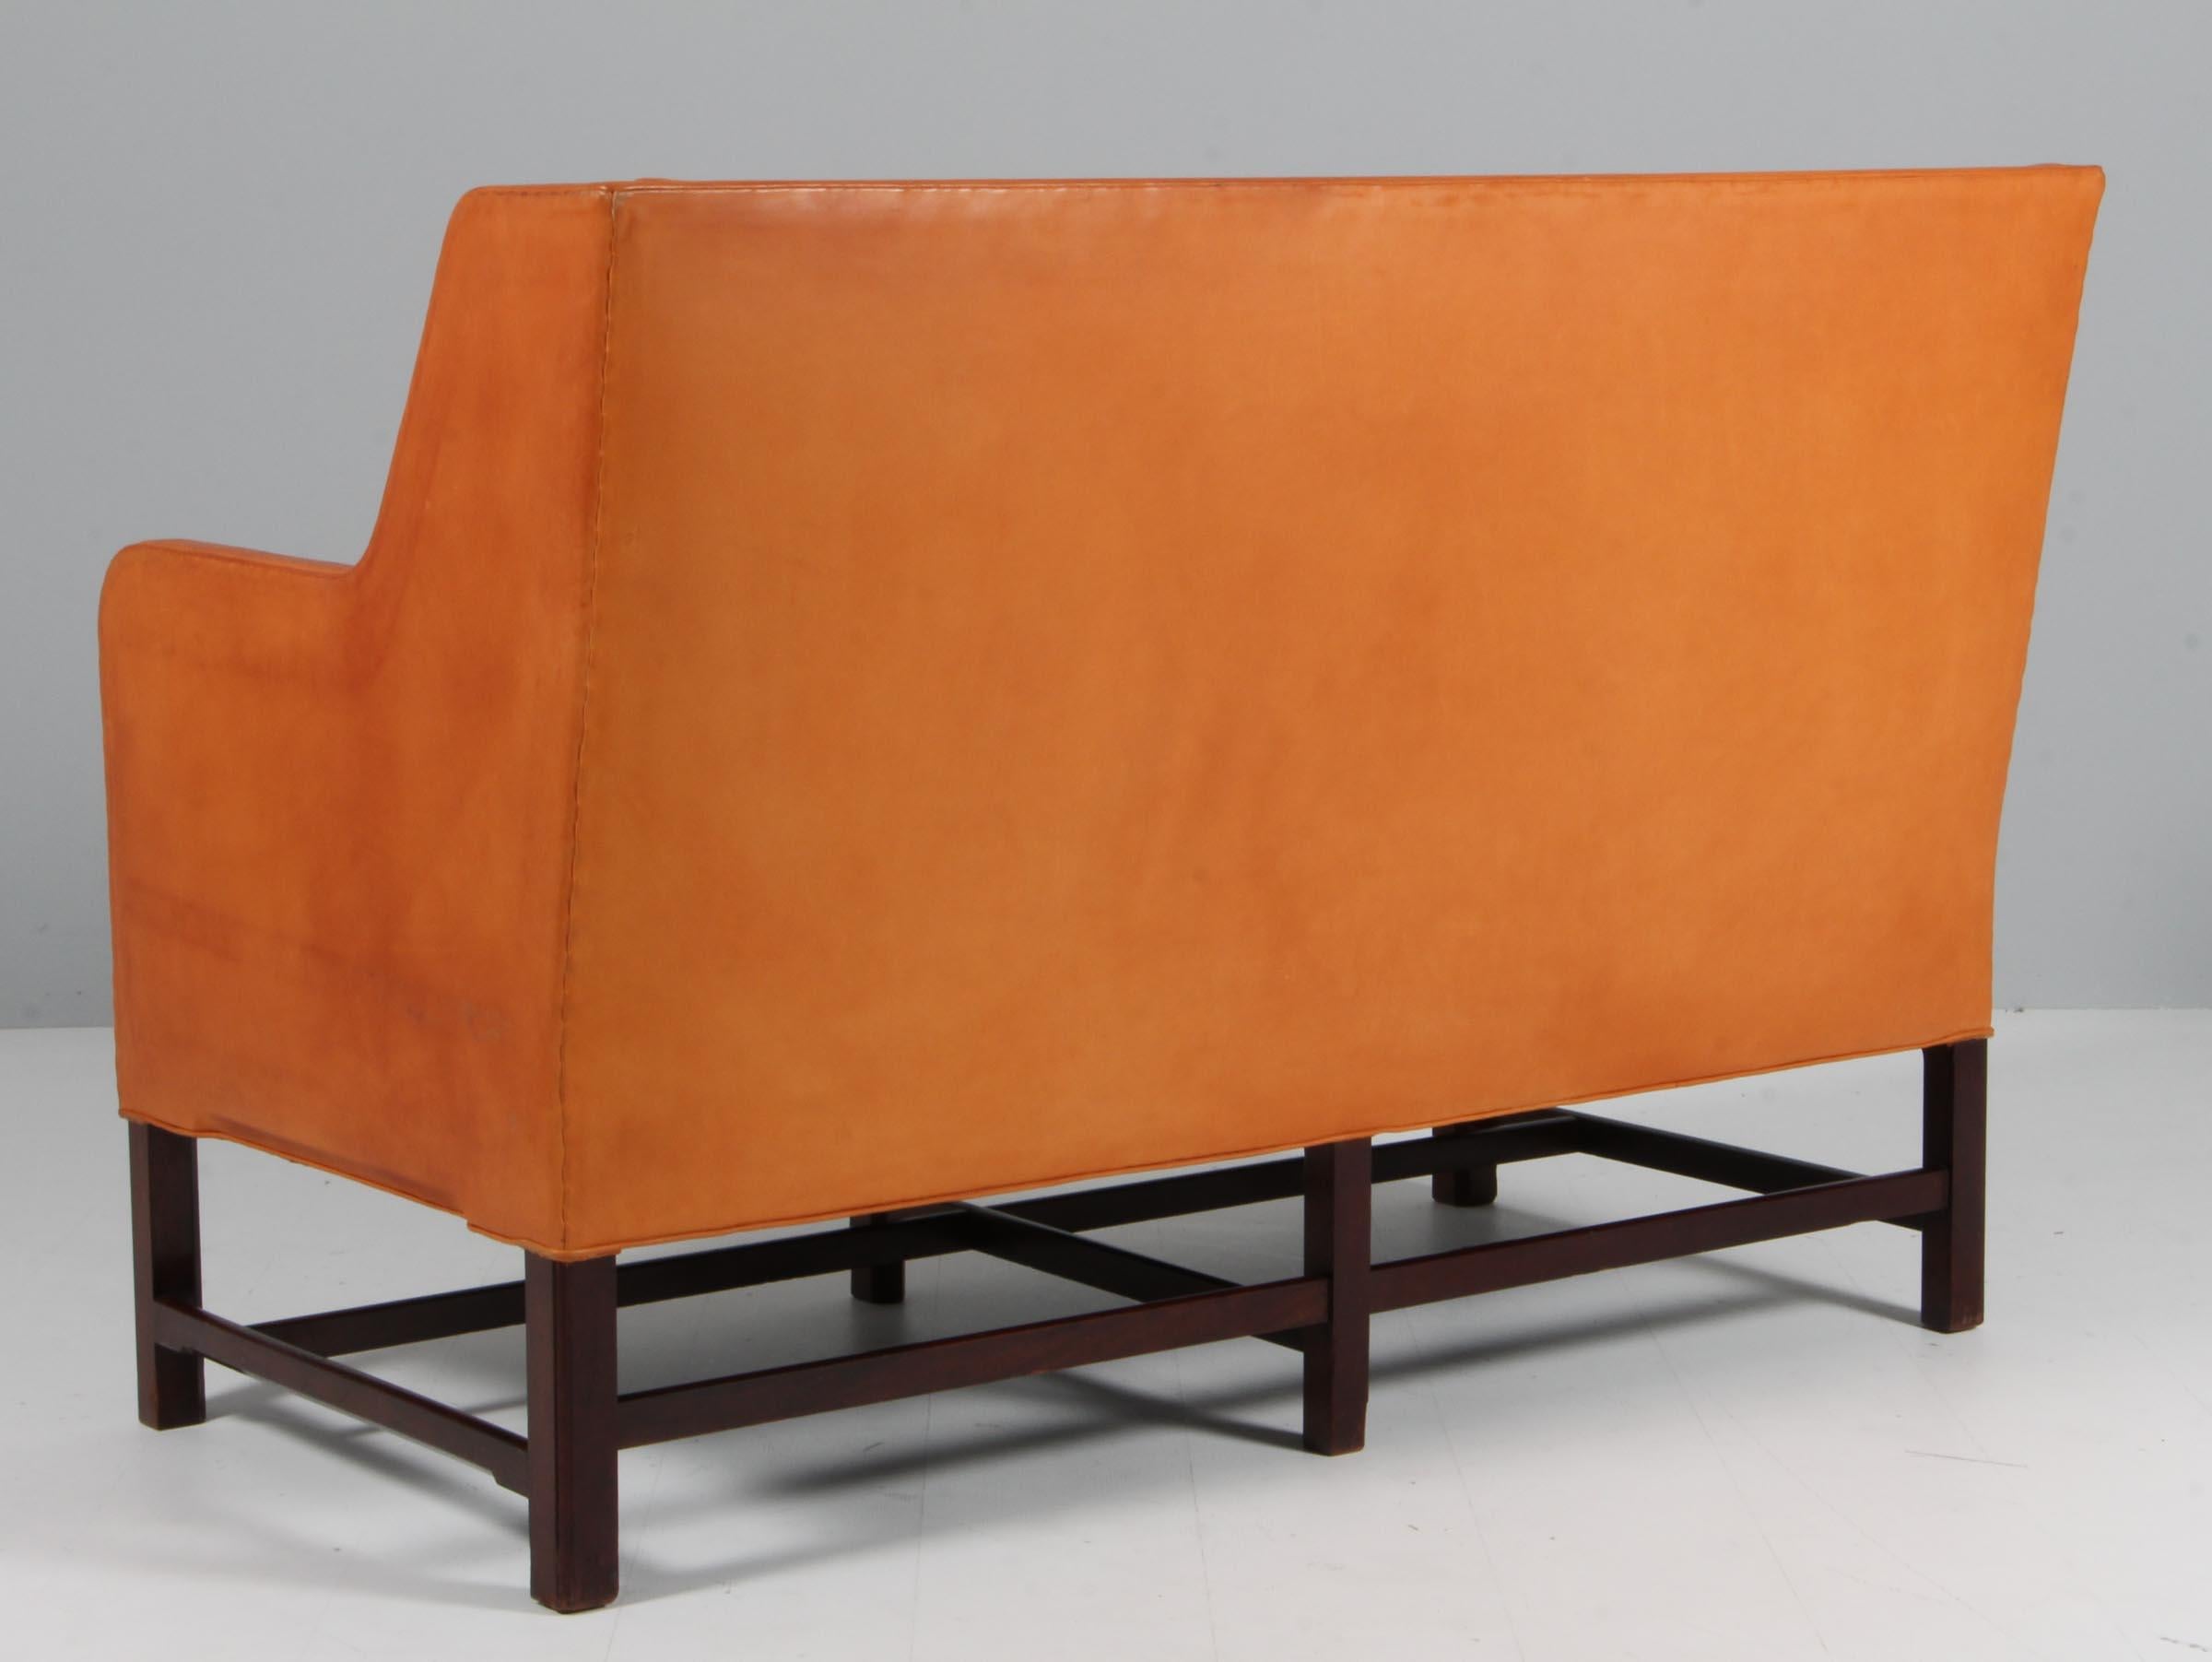 Scandinavian Modern Kaare Klint Sofa Model No 5011 Produced by Rud. Rasmussen in Denmark